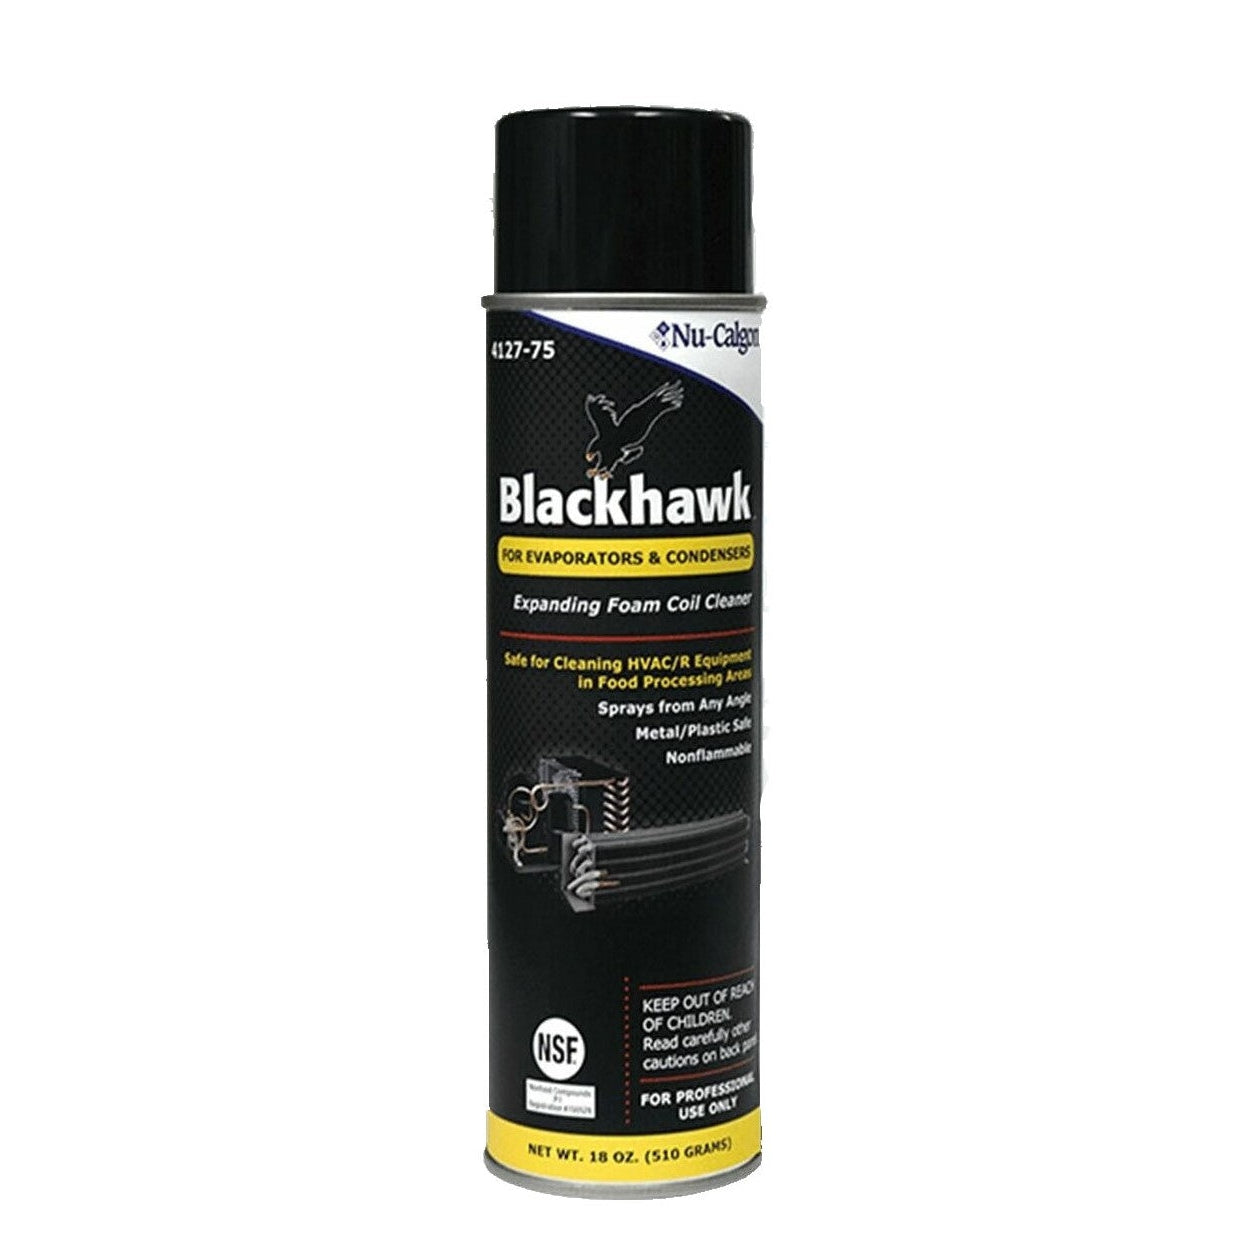 Blackhawk 'Expanding Foam' Air-Con Coil Cleaner